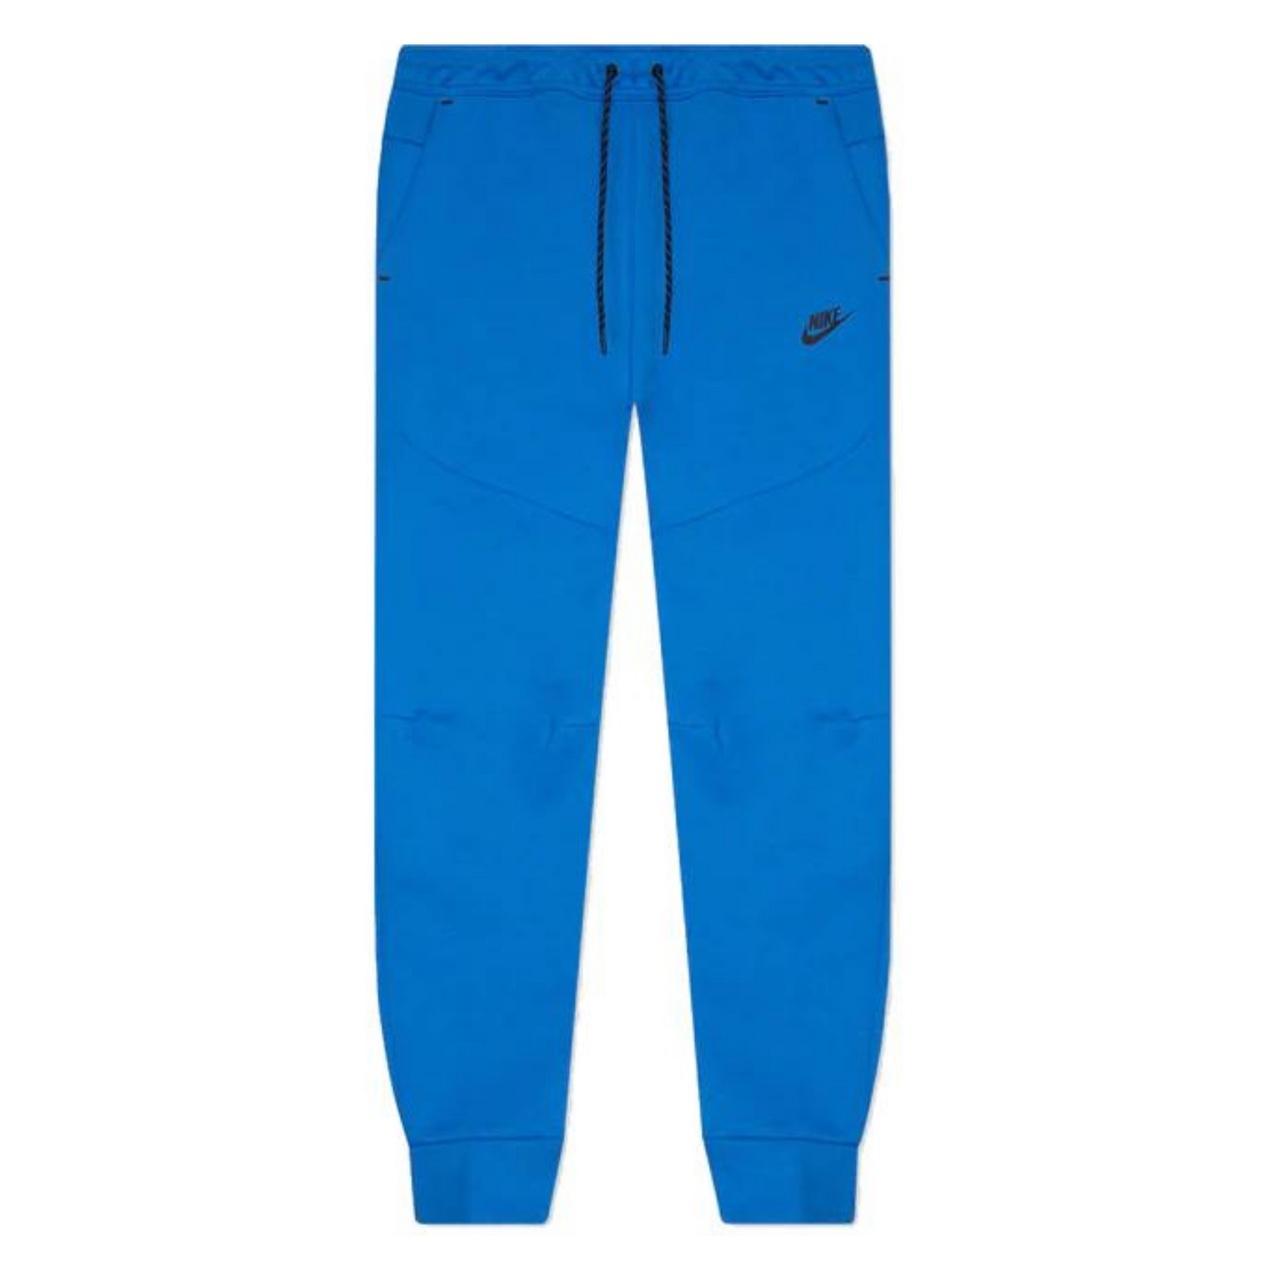 Nike Men's Blue and Black Joggers-tracksuits | Depop